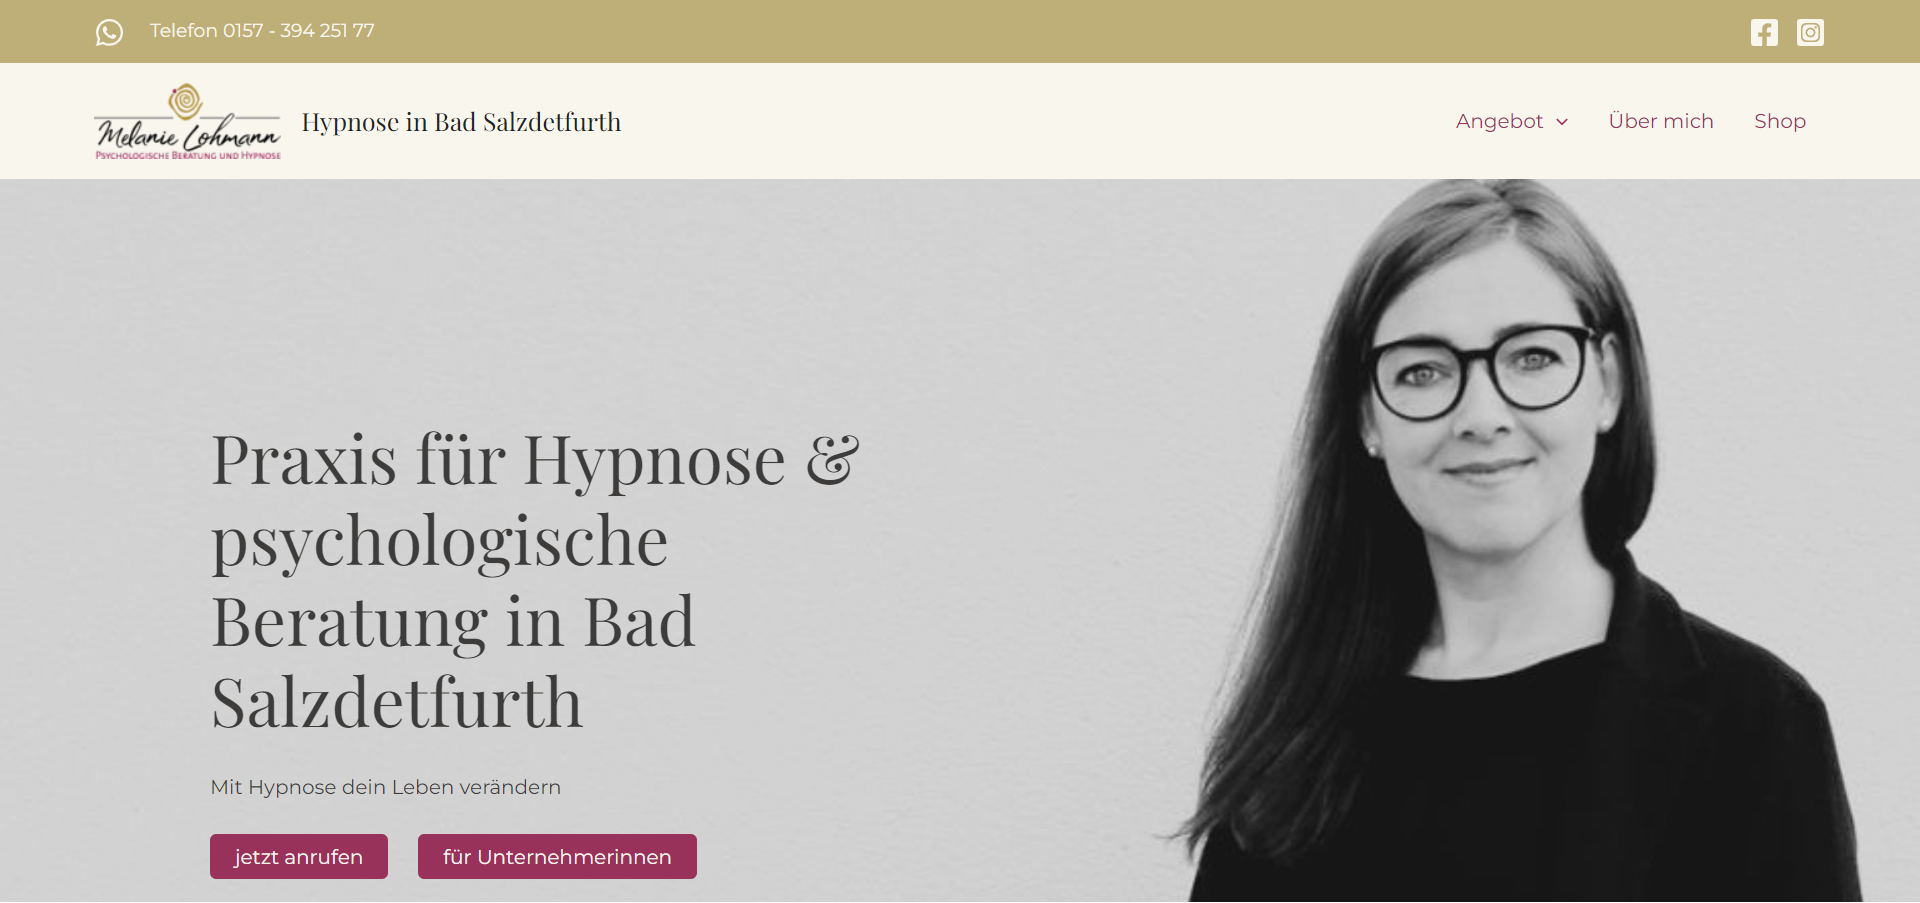 (c) Hypnose-lohmann.de